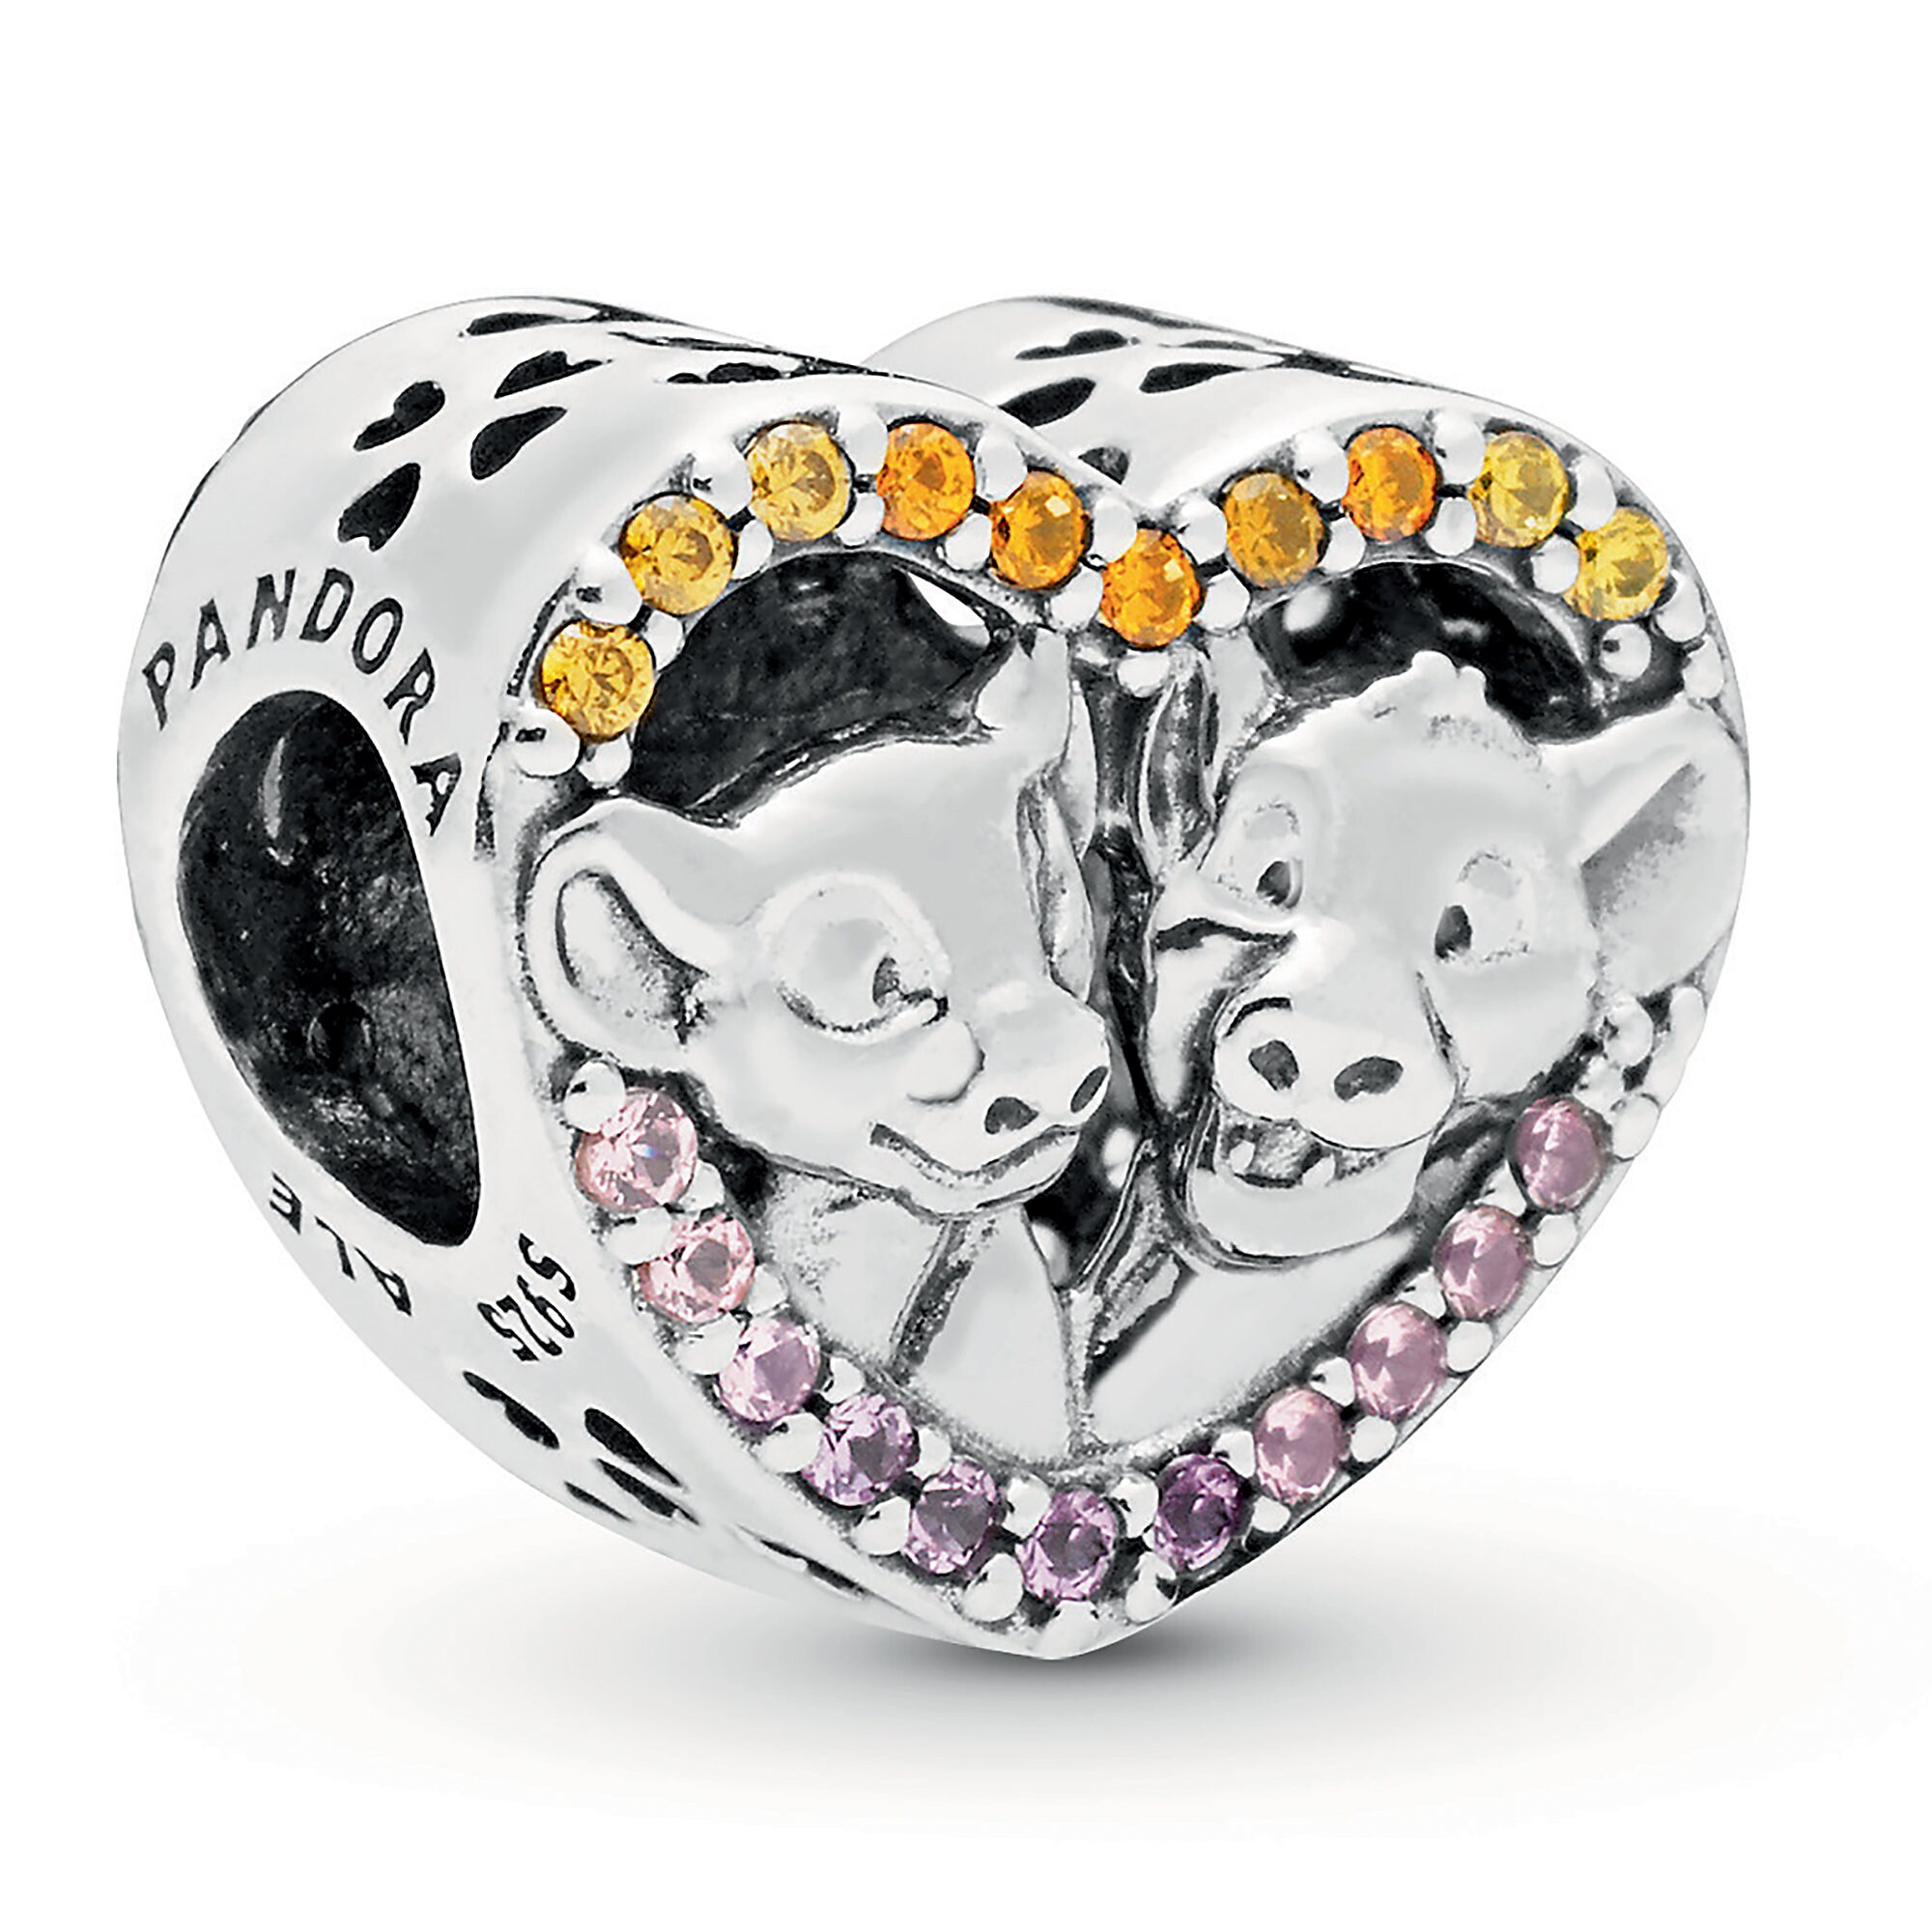 Simba and Nala Heart Charm by Pandora Jewelry